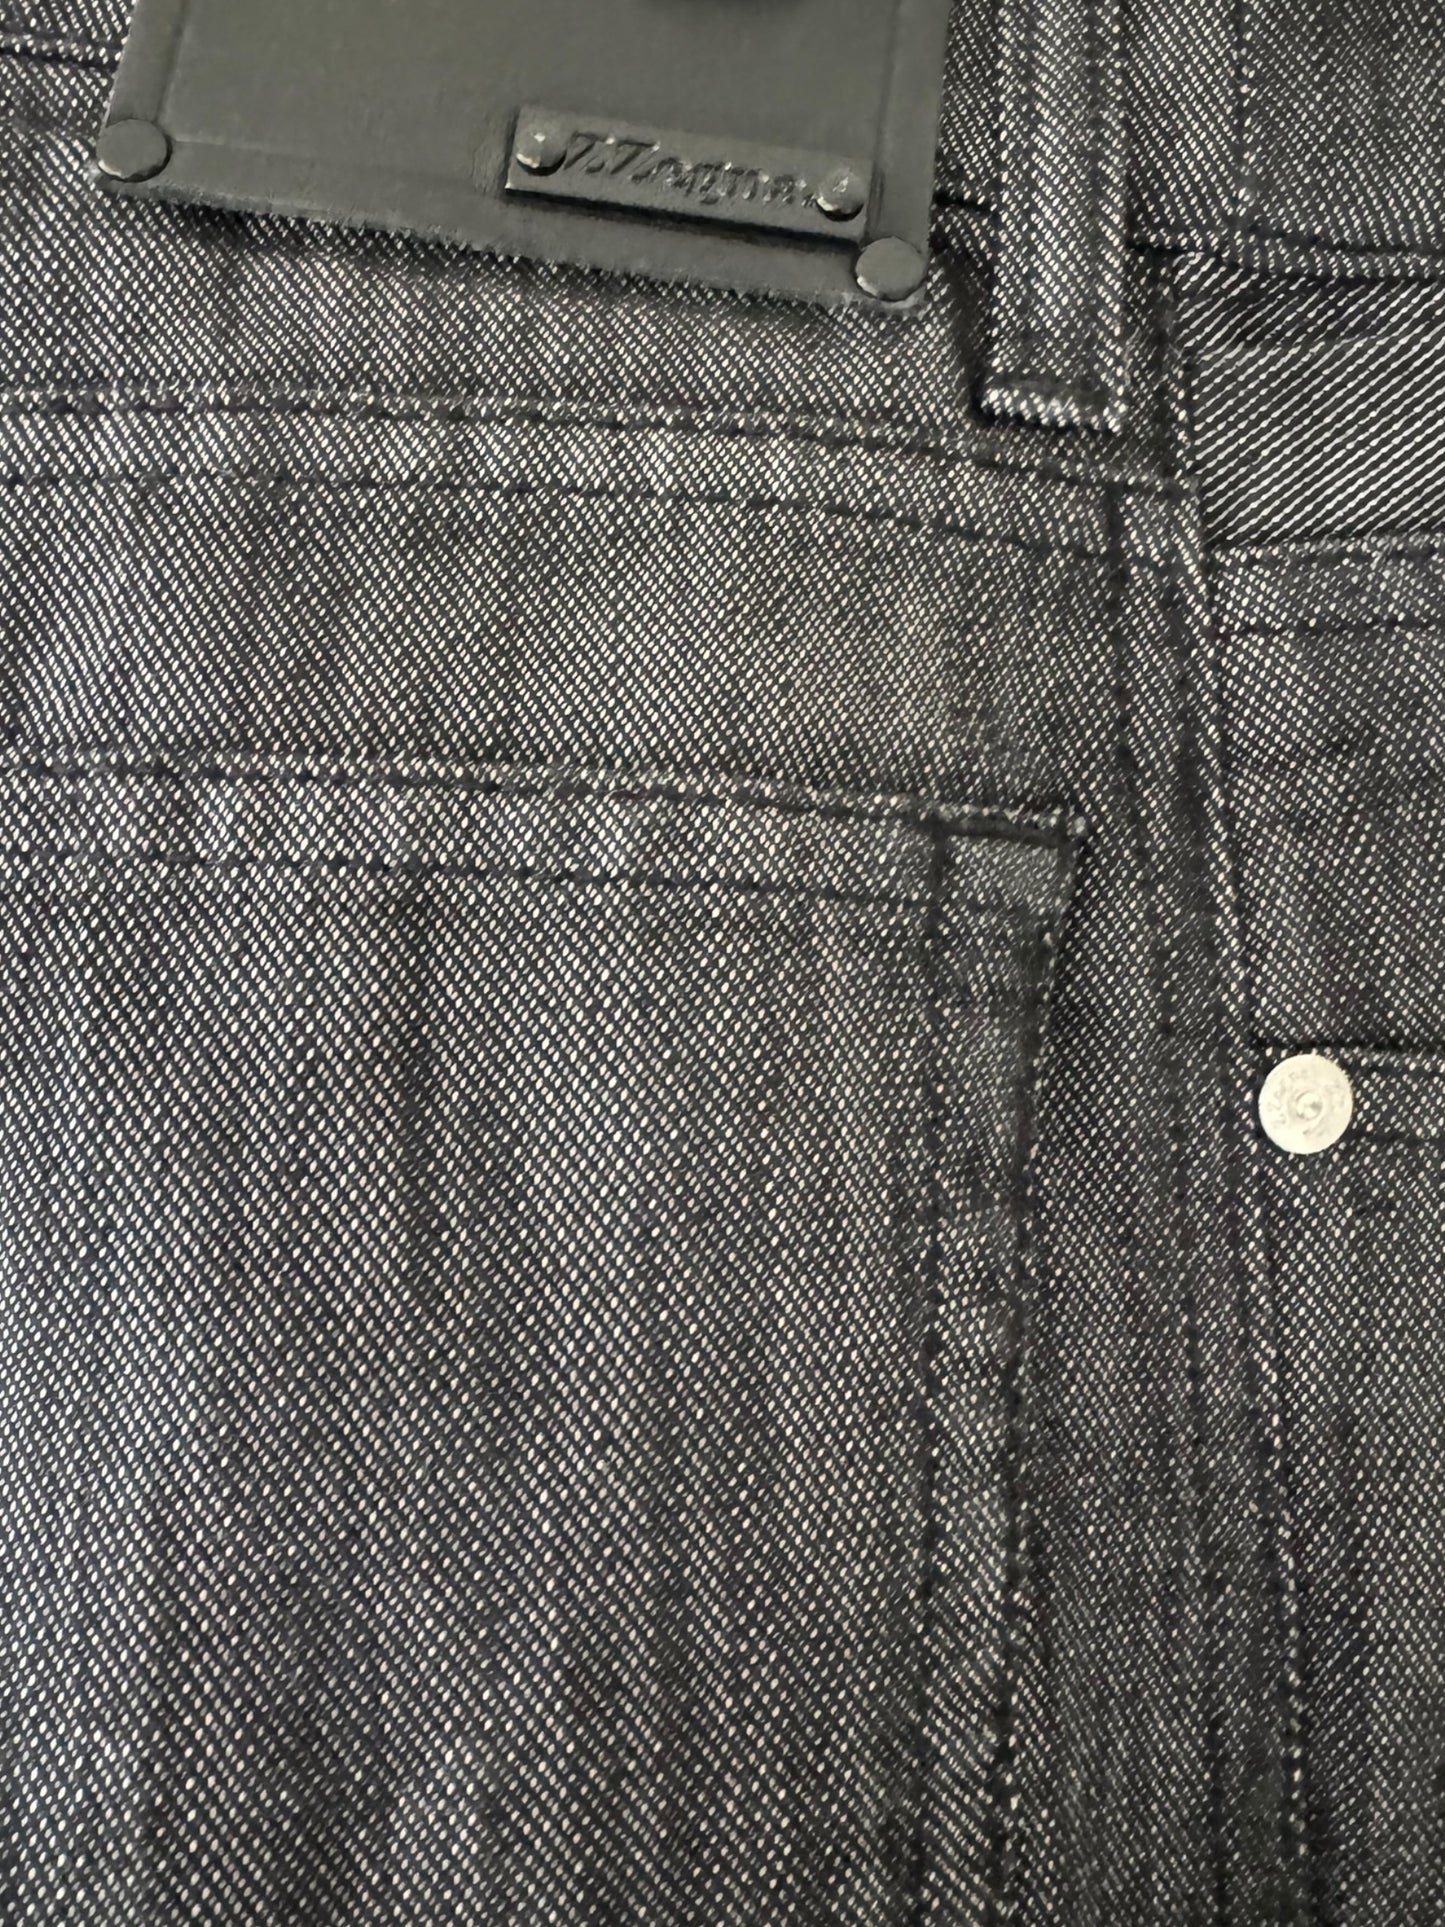 mens ZEGNA grey jeans size 33